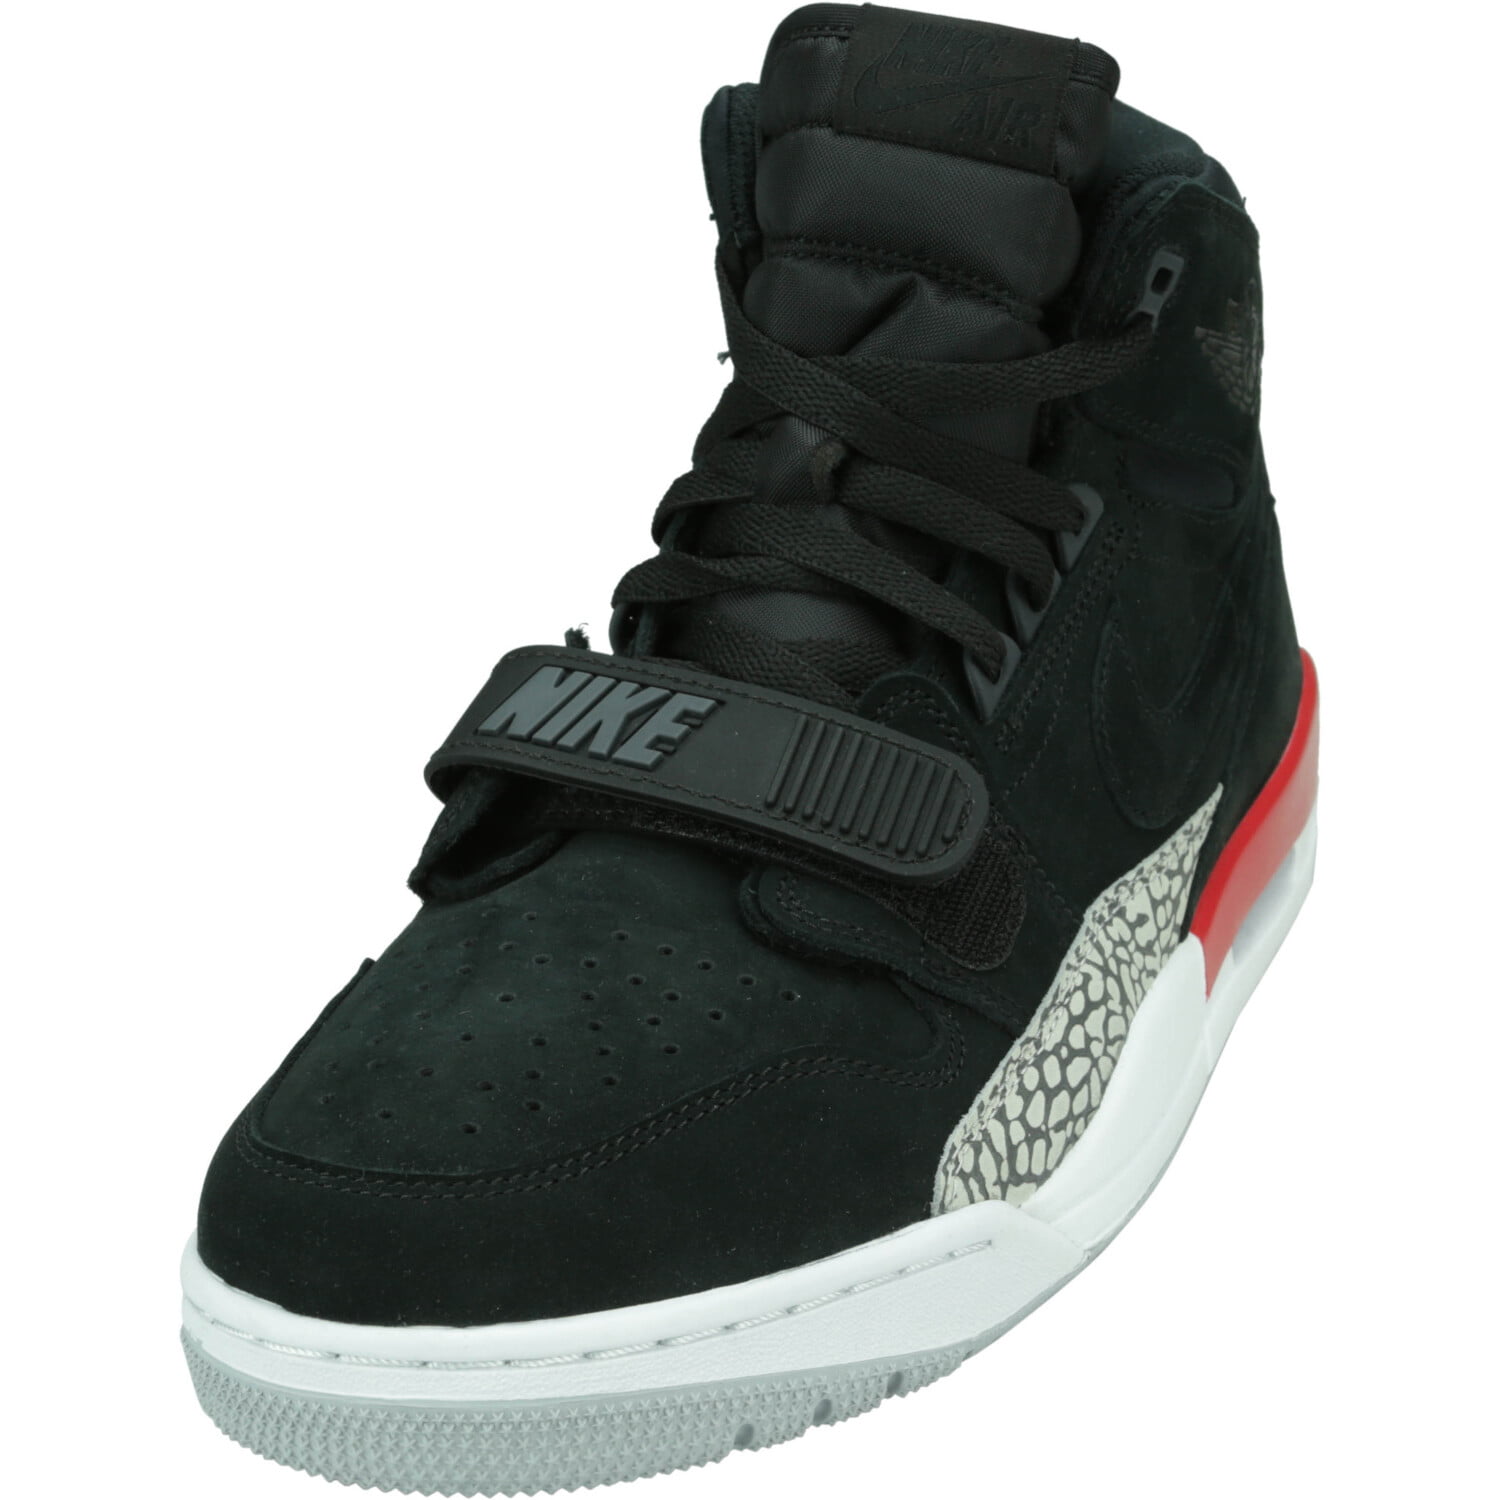 Air Jordan Nike Men S Air Jordan Legacy 312 Black Fire Red High Top Basketball 13m Walmart Com Walmart Com